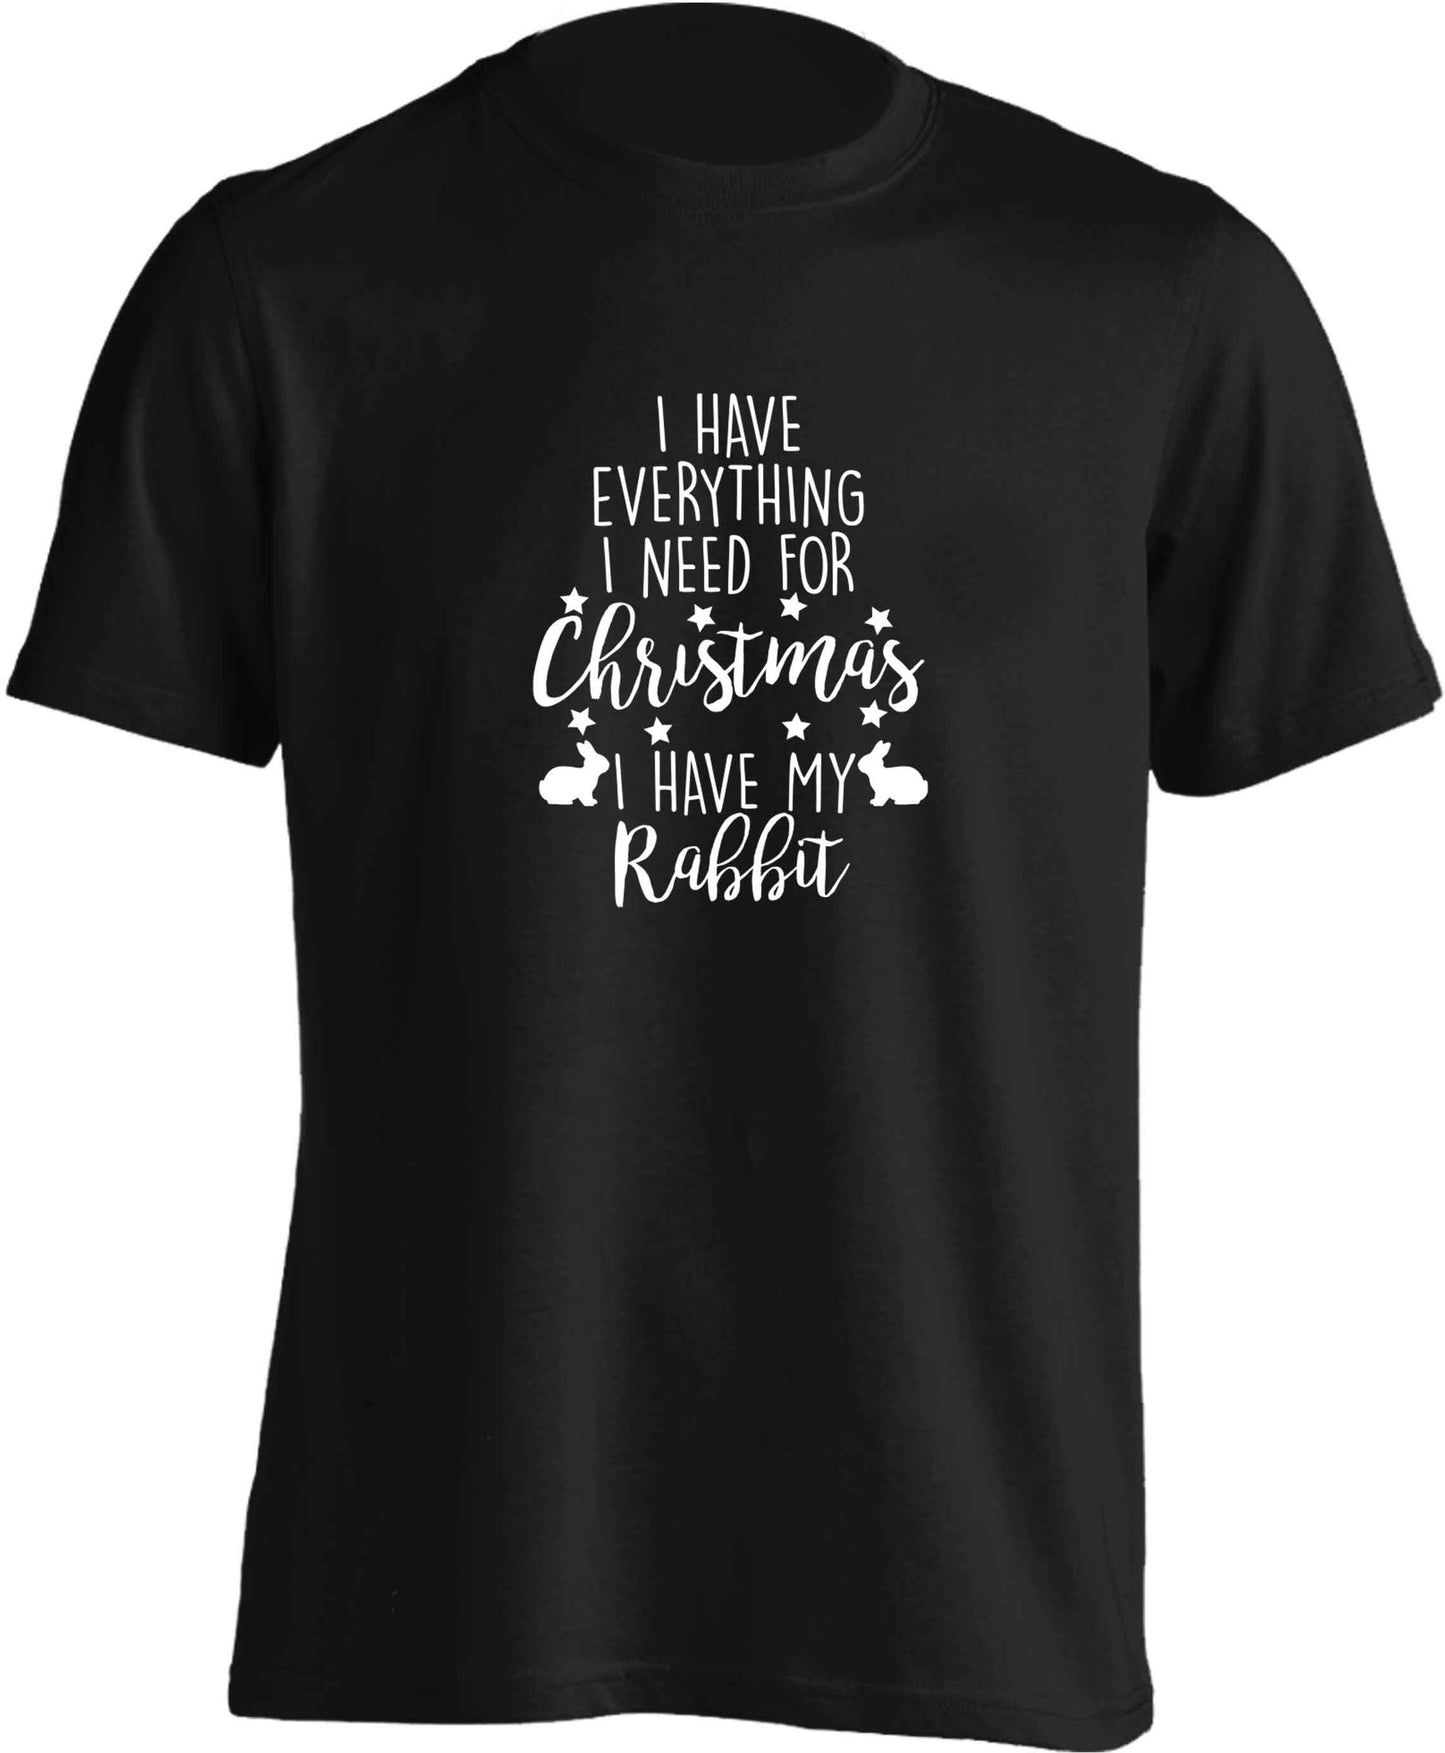 I have everything I need for Christmas I have my rabbit adults unisex black Tshirt 2XL